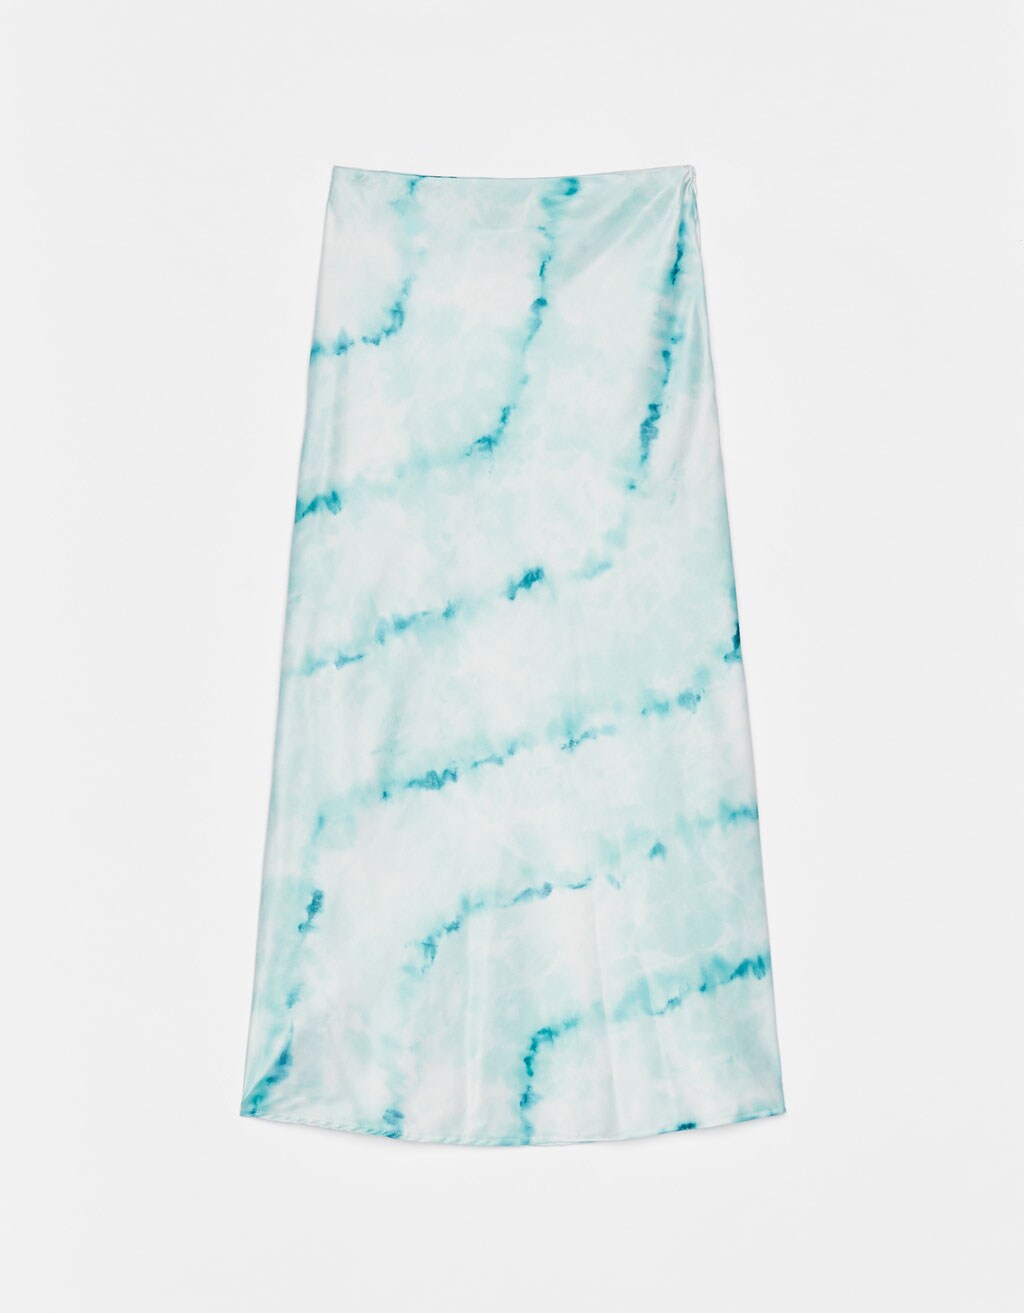 Falda midi de satén con estampado Tie dye, de  Bershka  (9,99 euros)